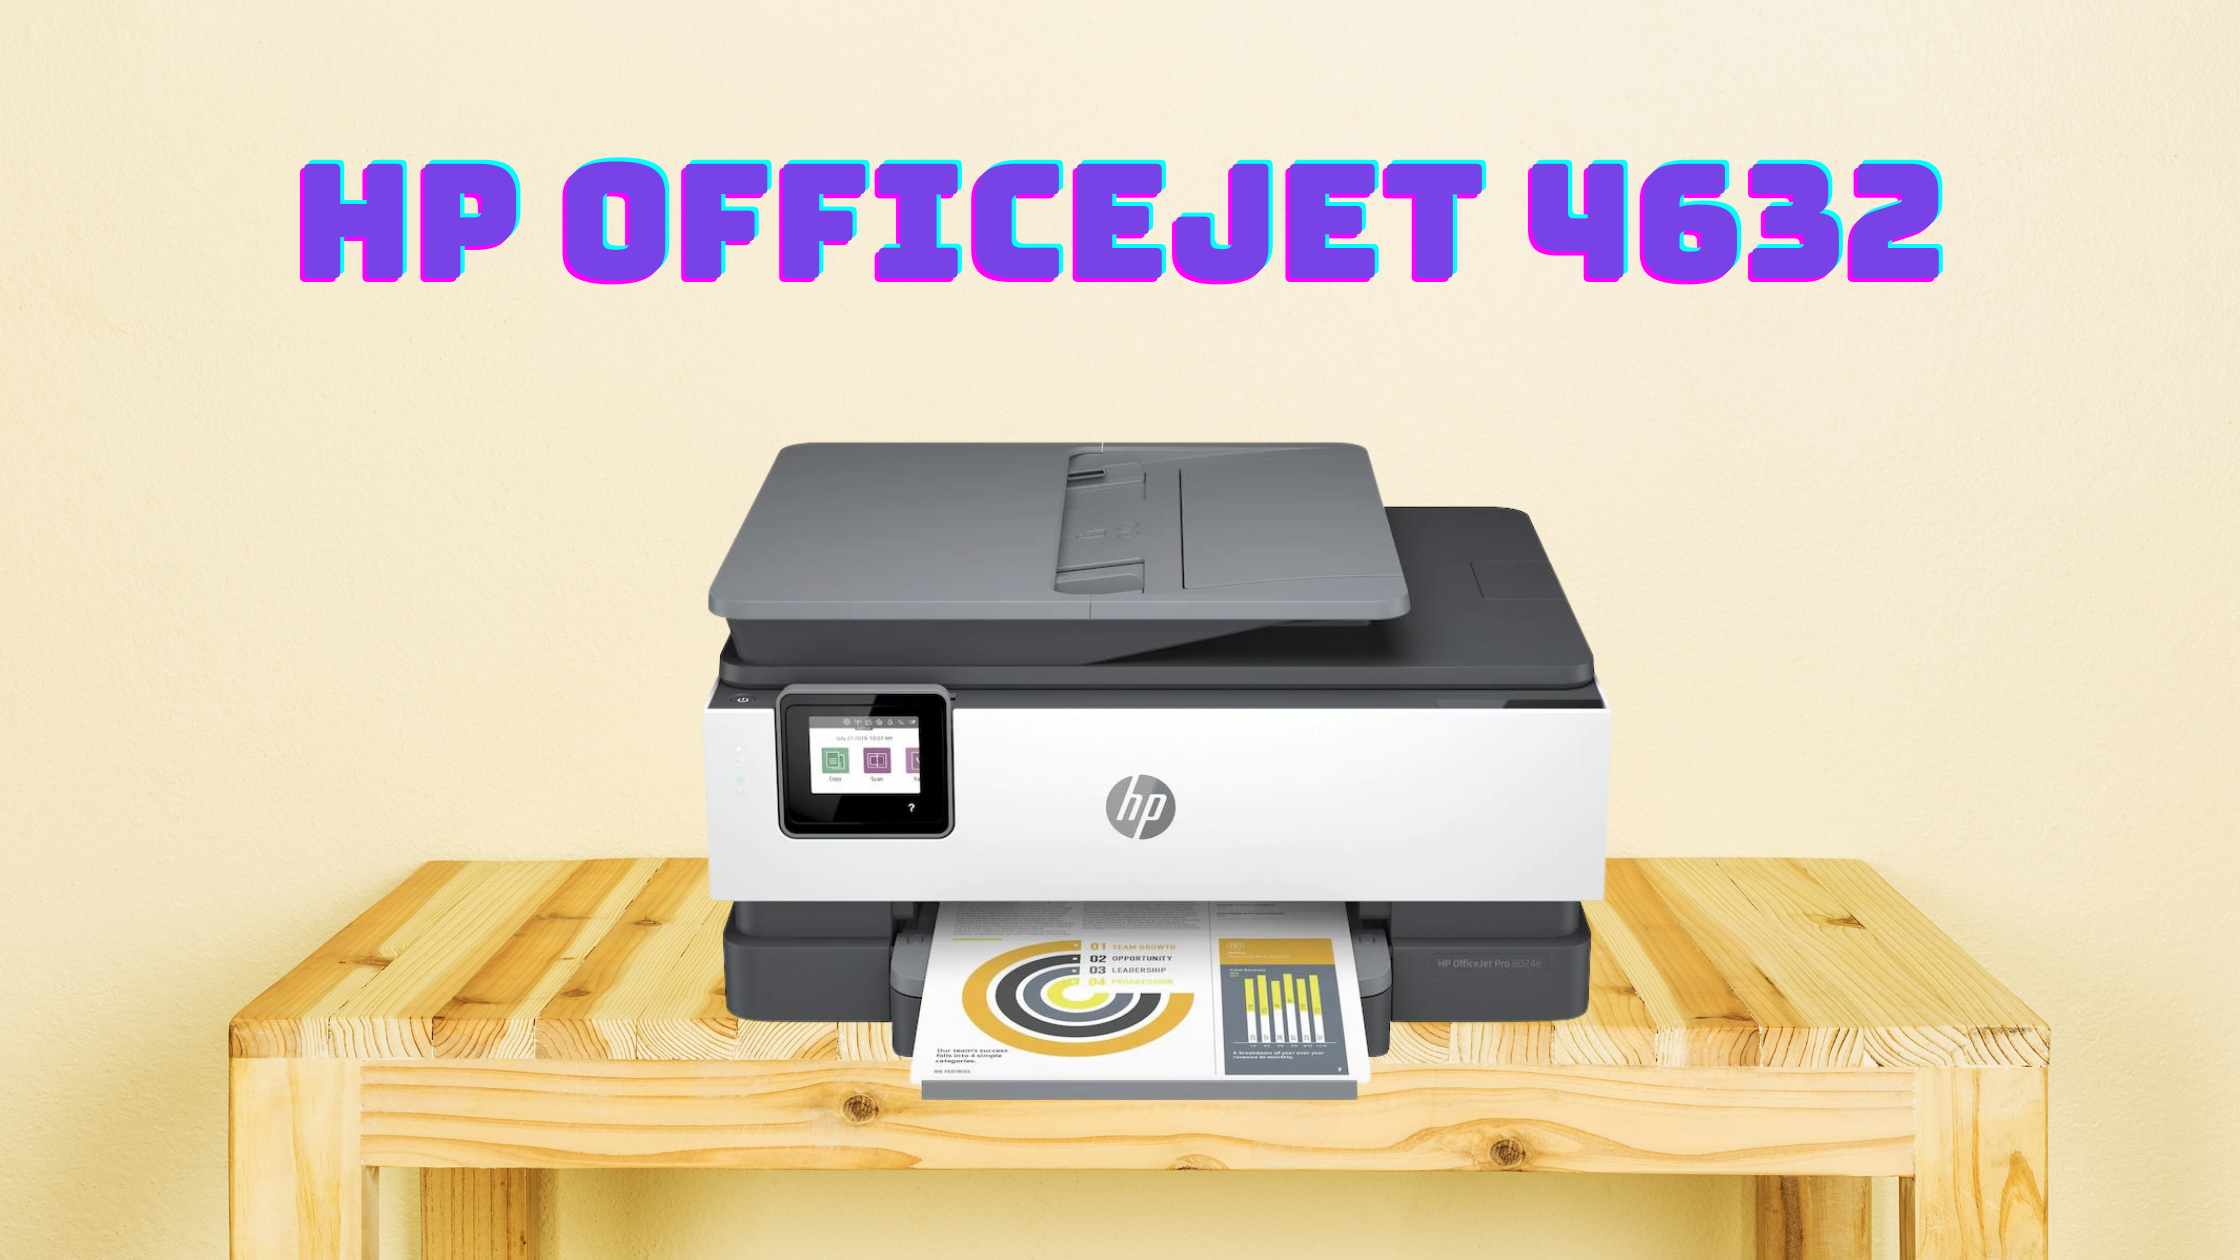 HP Officejet 4632 printer driver configuration